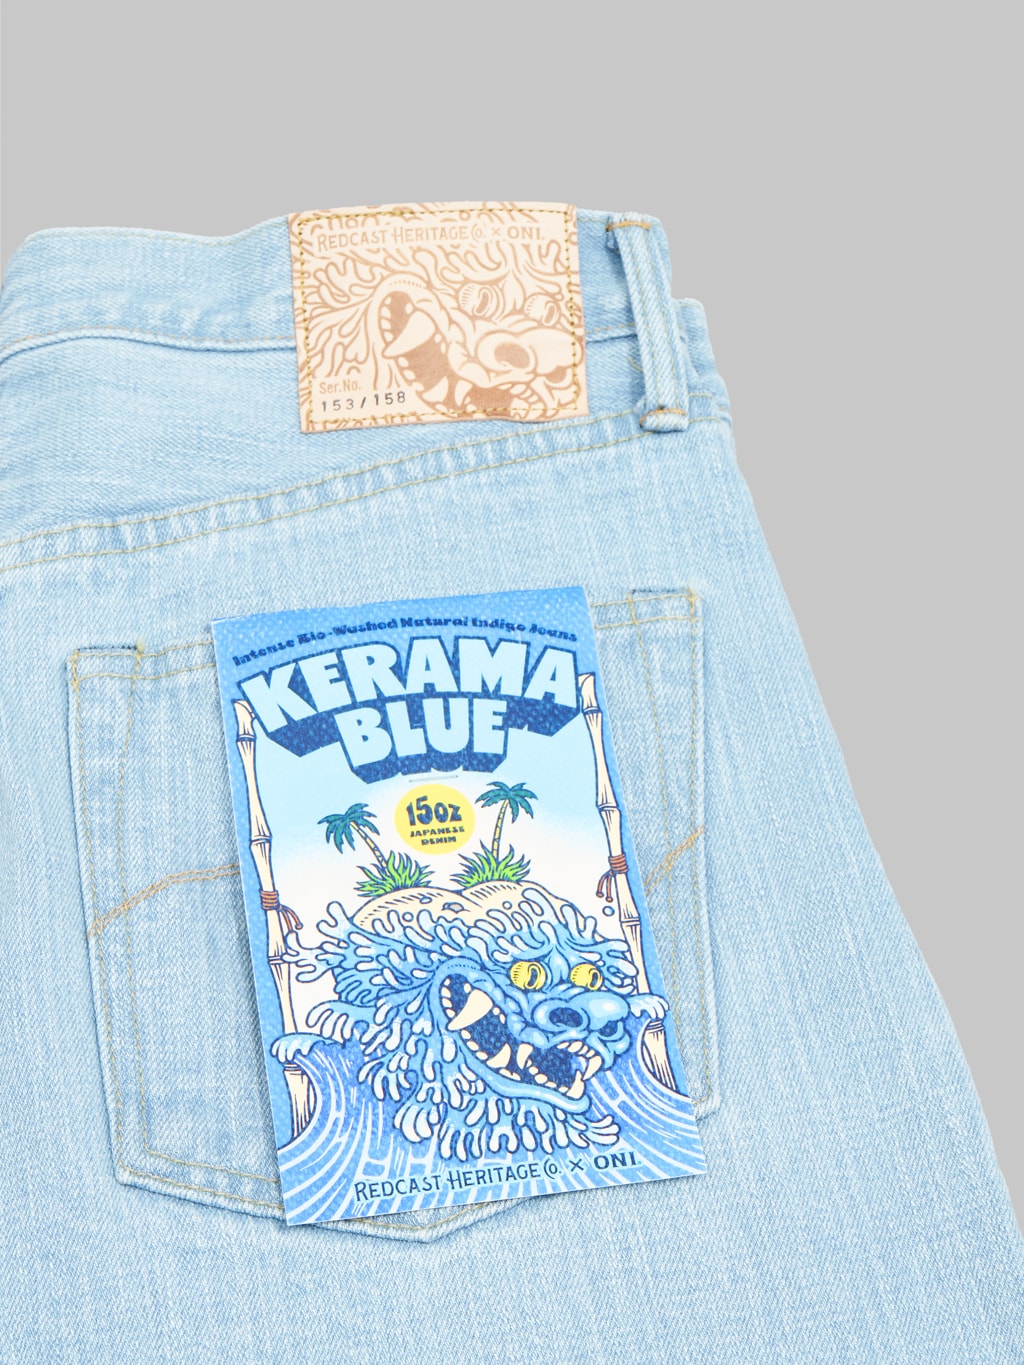 redcast heritage x oni denim kerama blue 15oz selvedge jeans pocket flasher